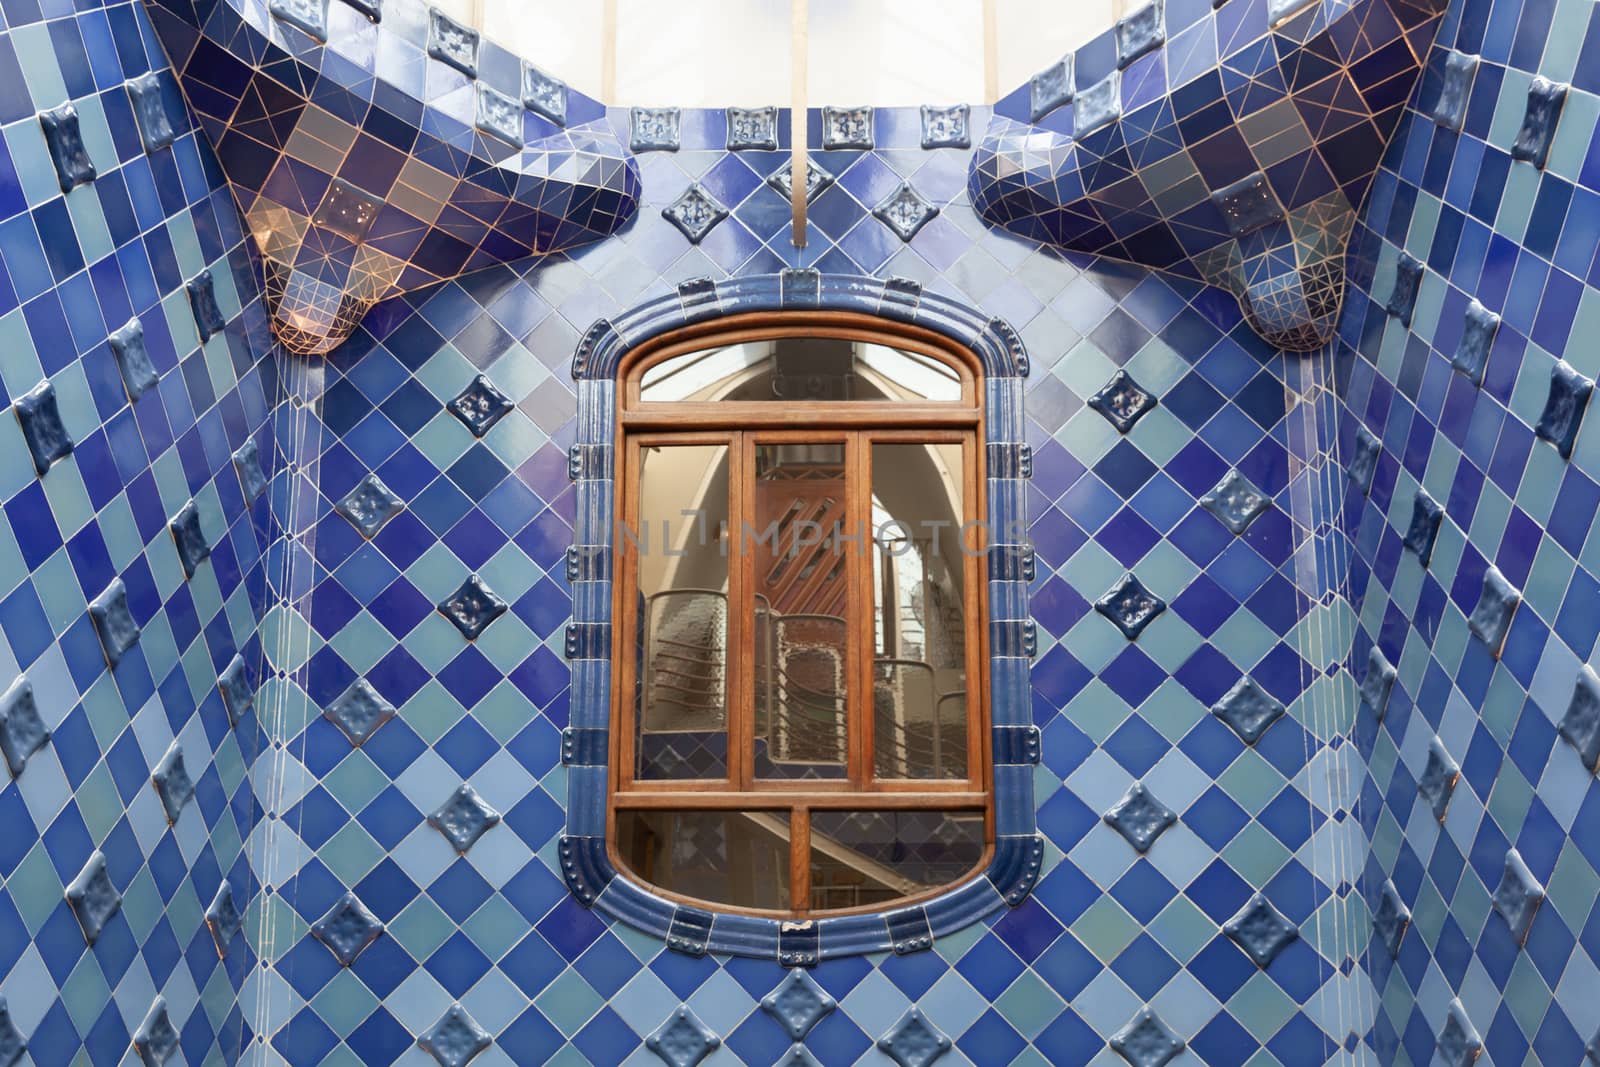 Casa Batllo atrium with inner windows, Barcelona, Spain by vlad-m